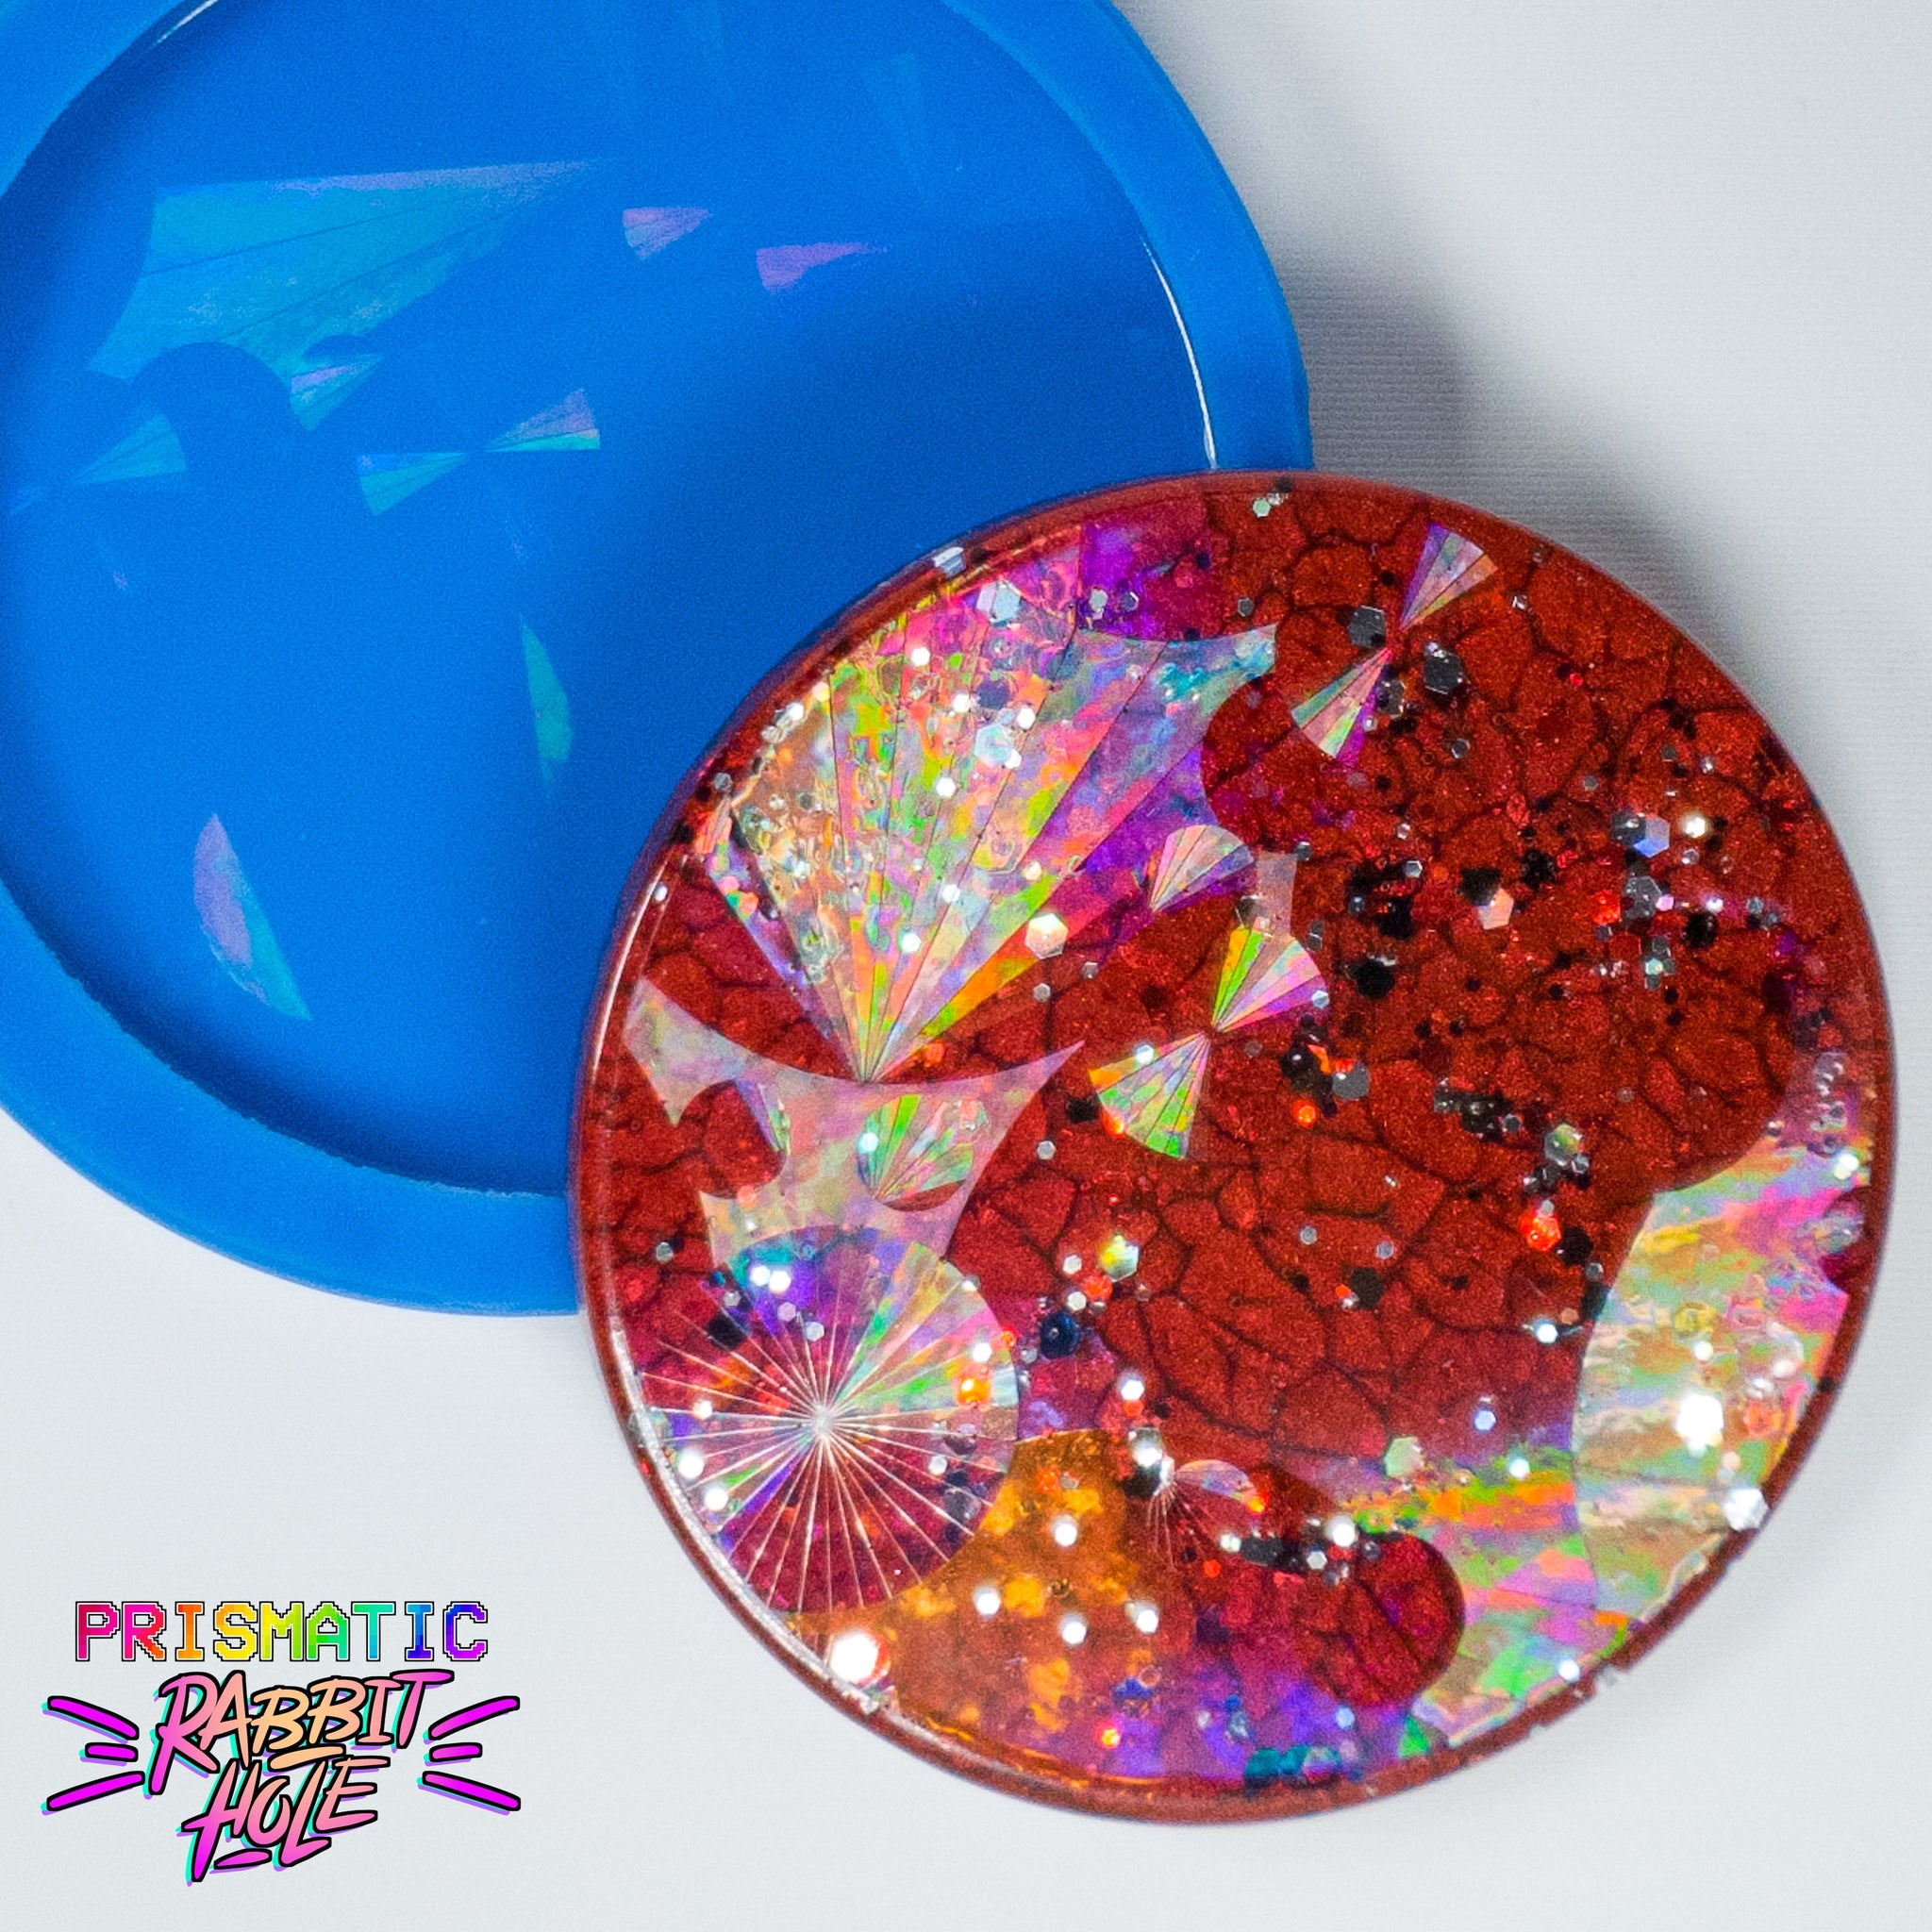 Holographic Silicone Rimmed Coaster Mold - Large Round Shape